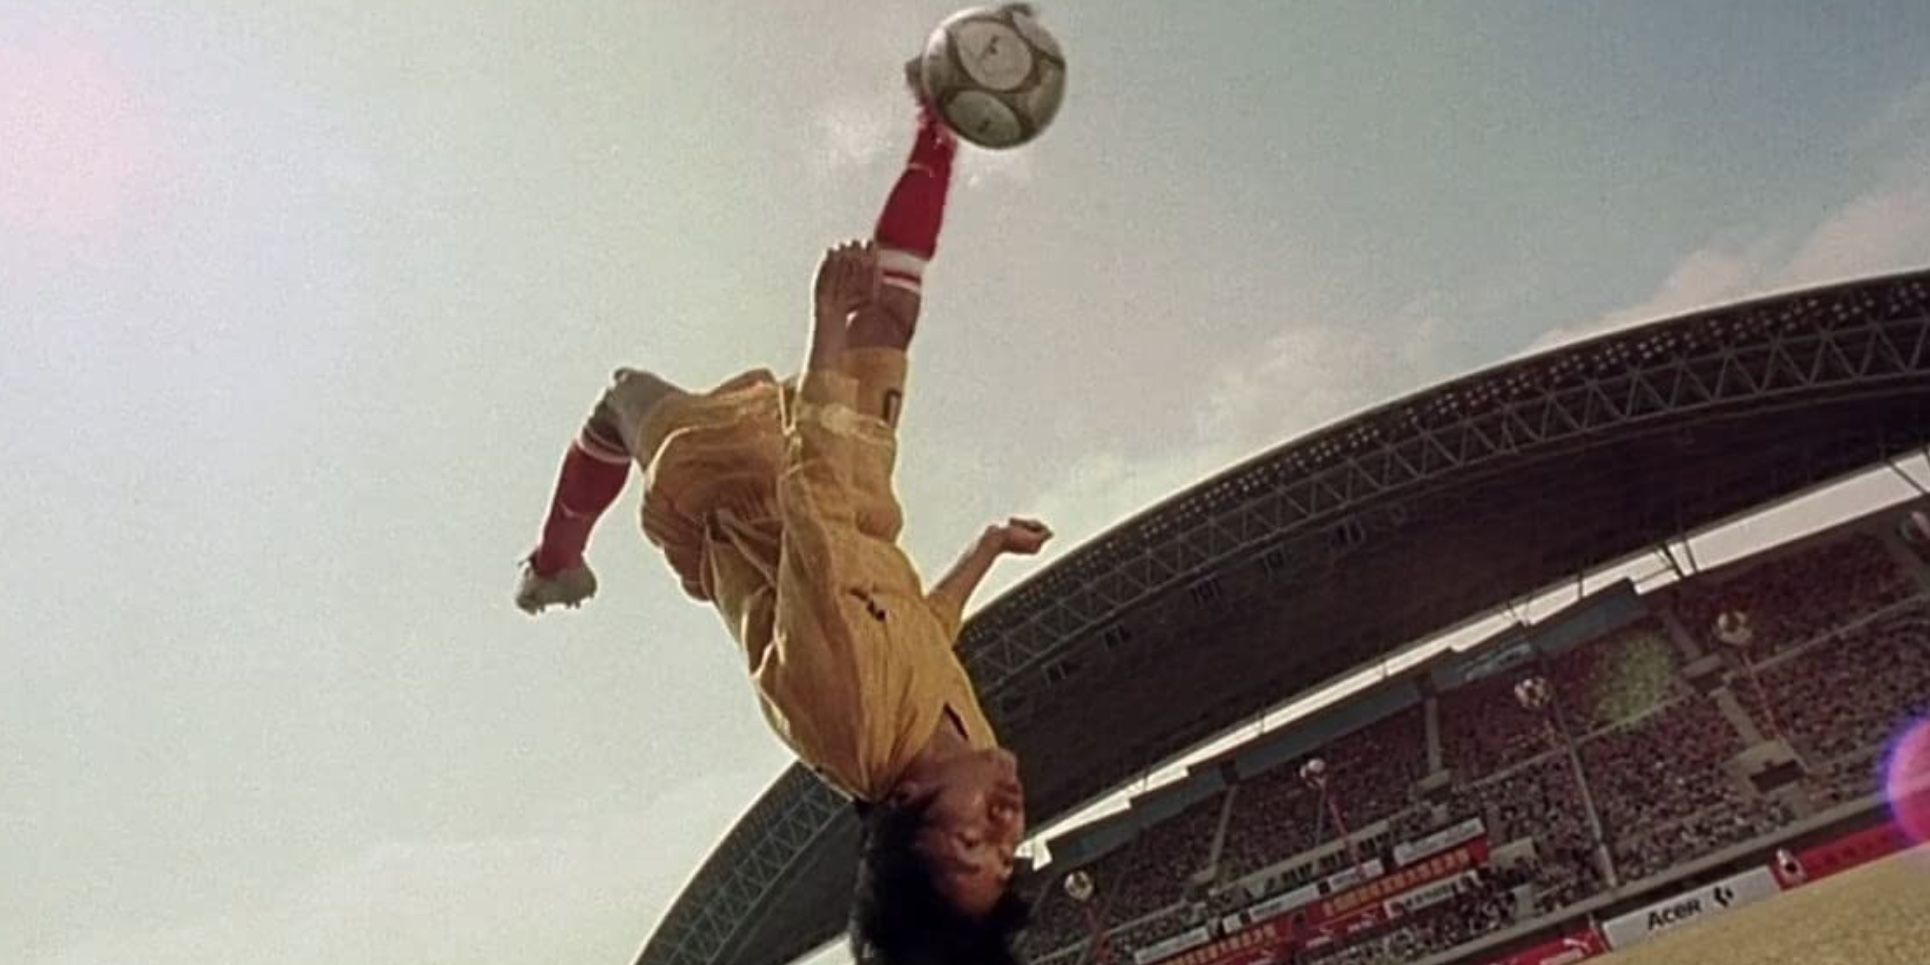 A player kicks a soccer ball while upside down in the air